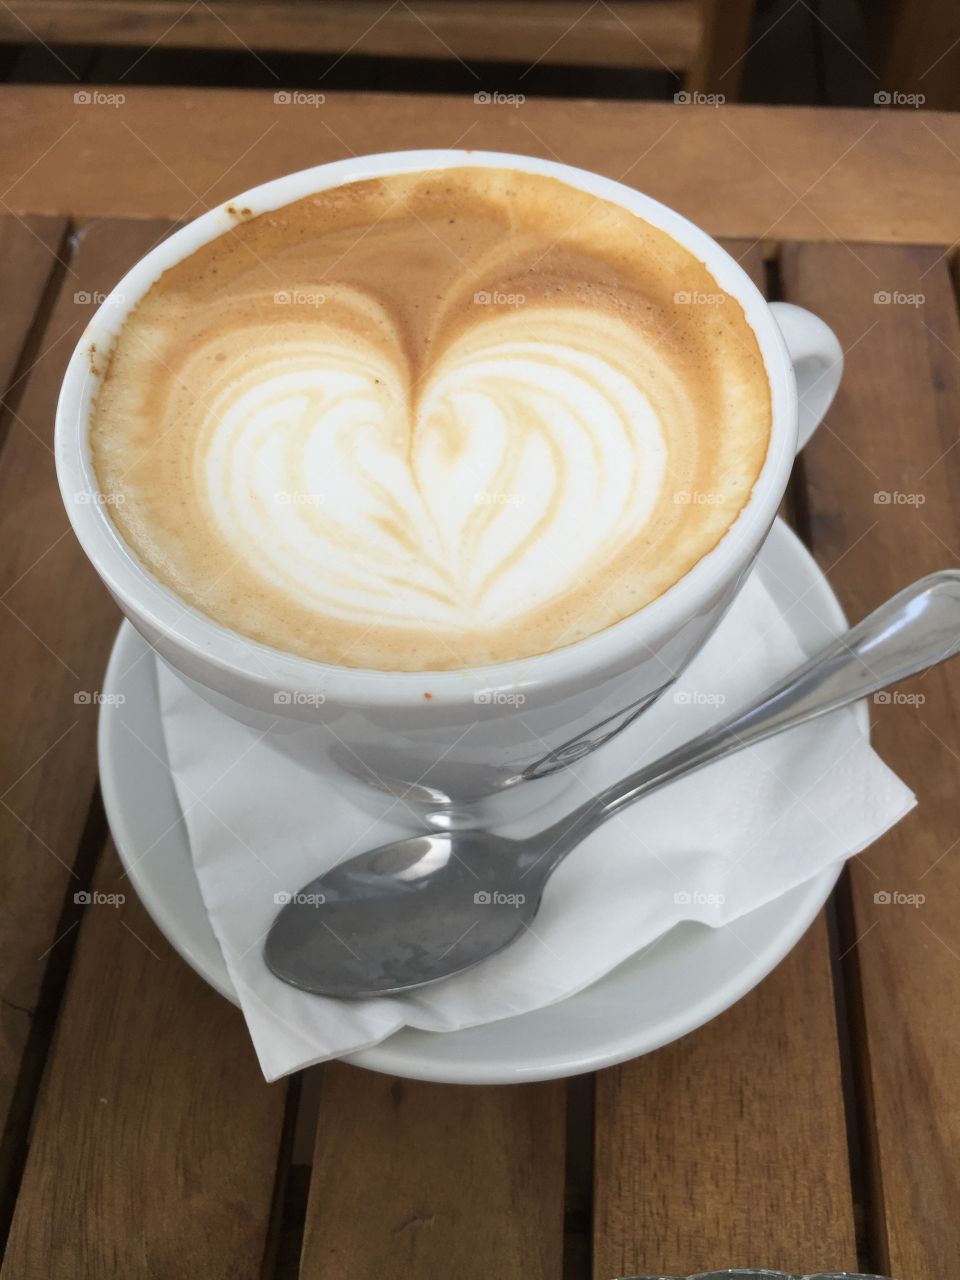 Coffee time
#coffee #latte #foam #cafe #cappucino